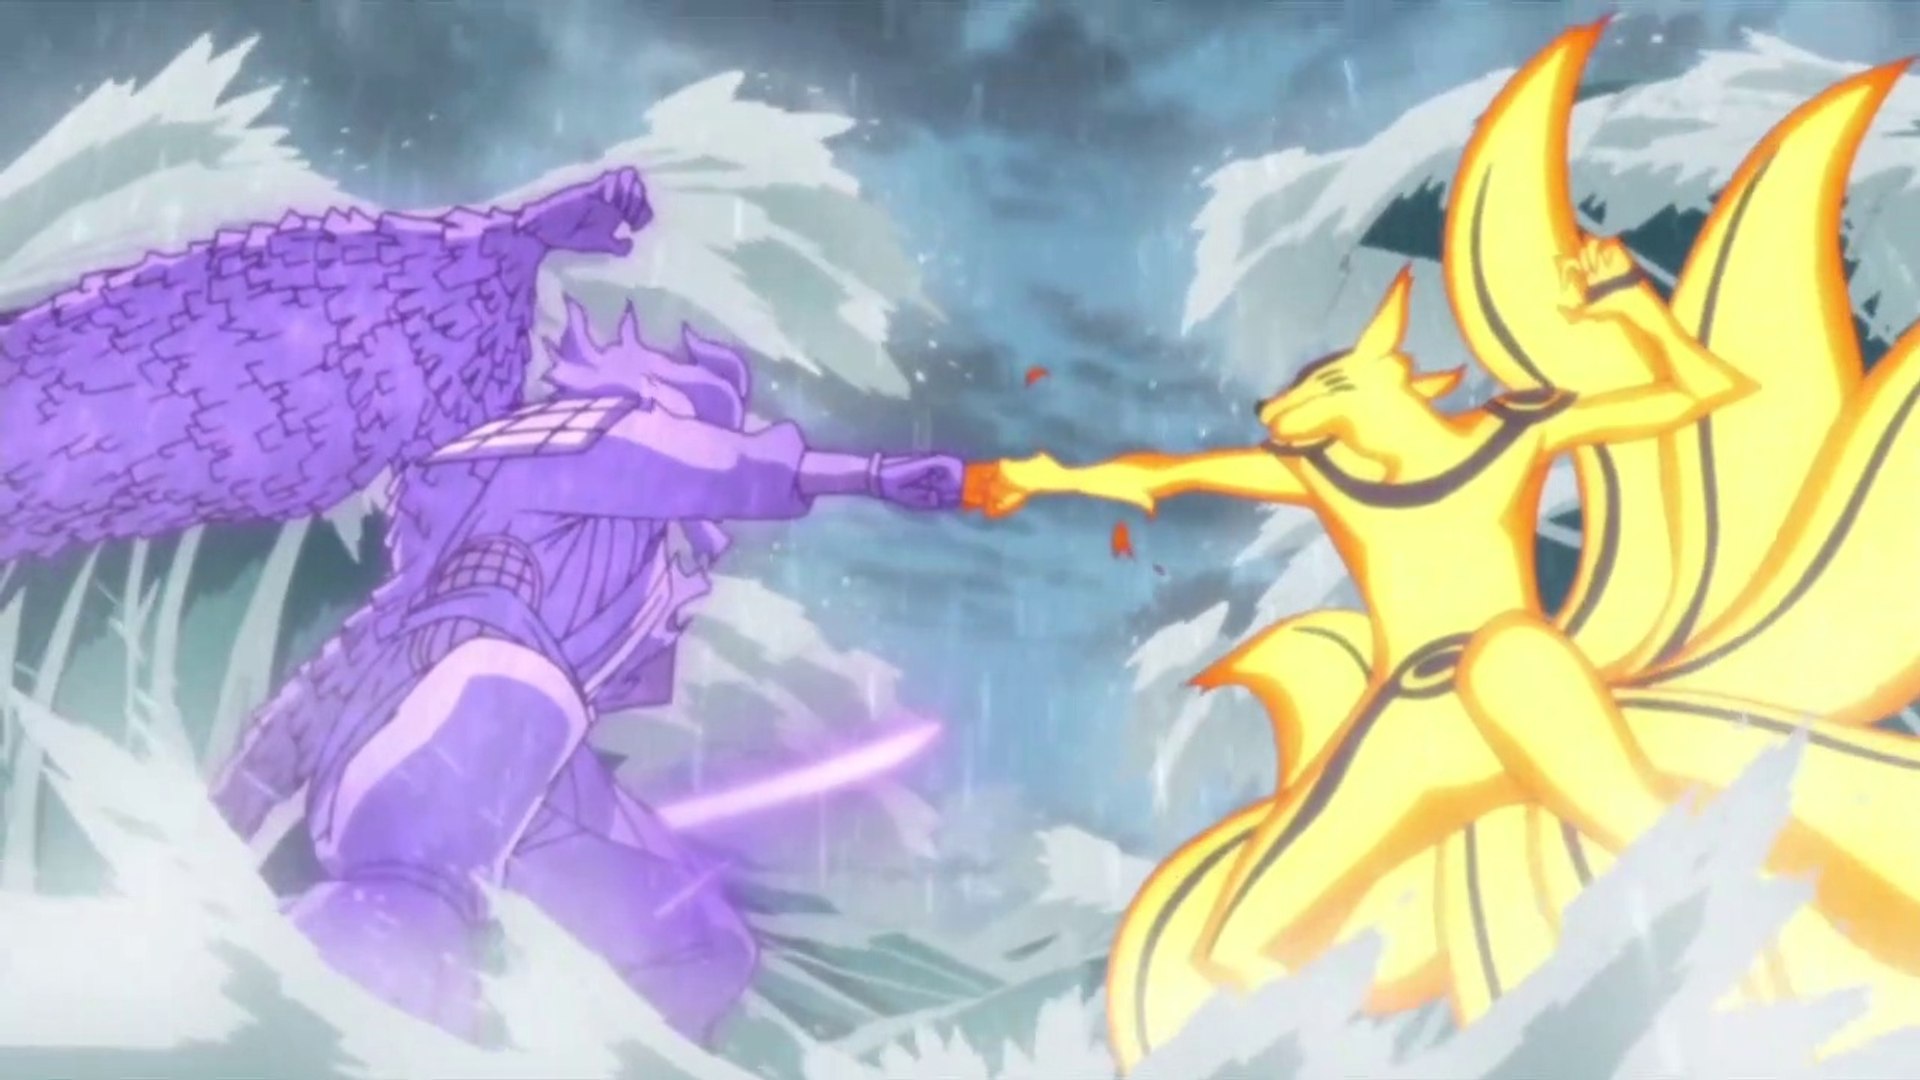 Madara vs First Hokage  Battle, Naruto art, Anime